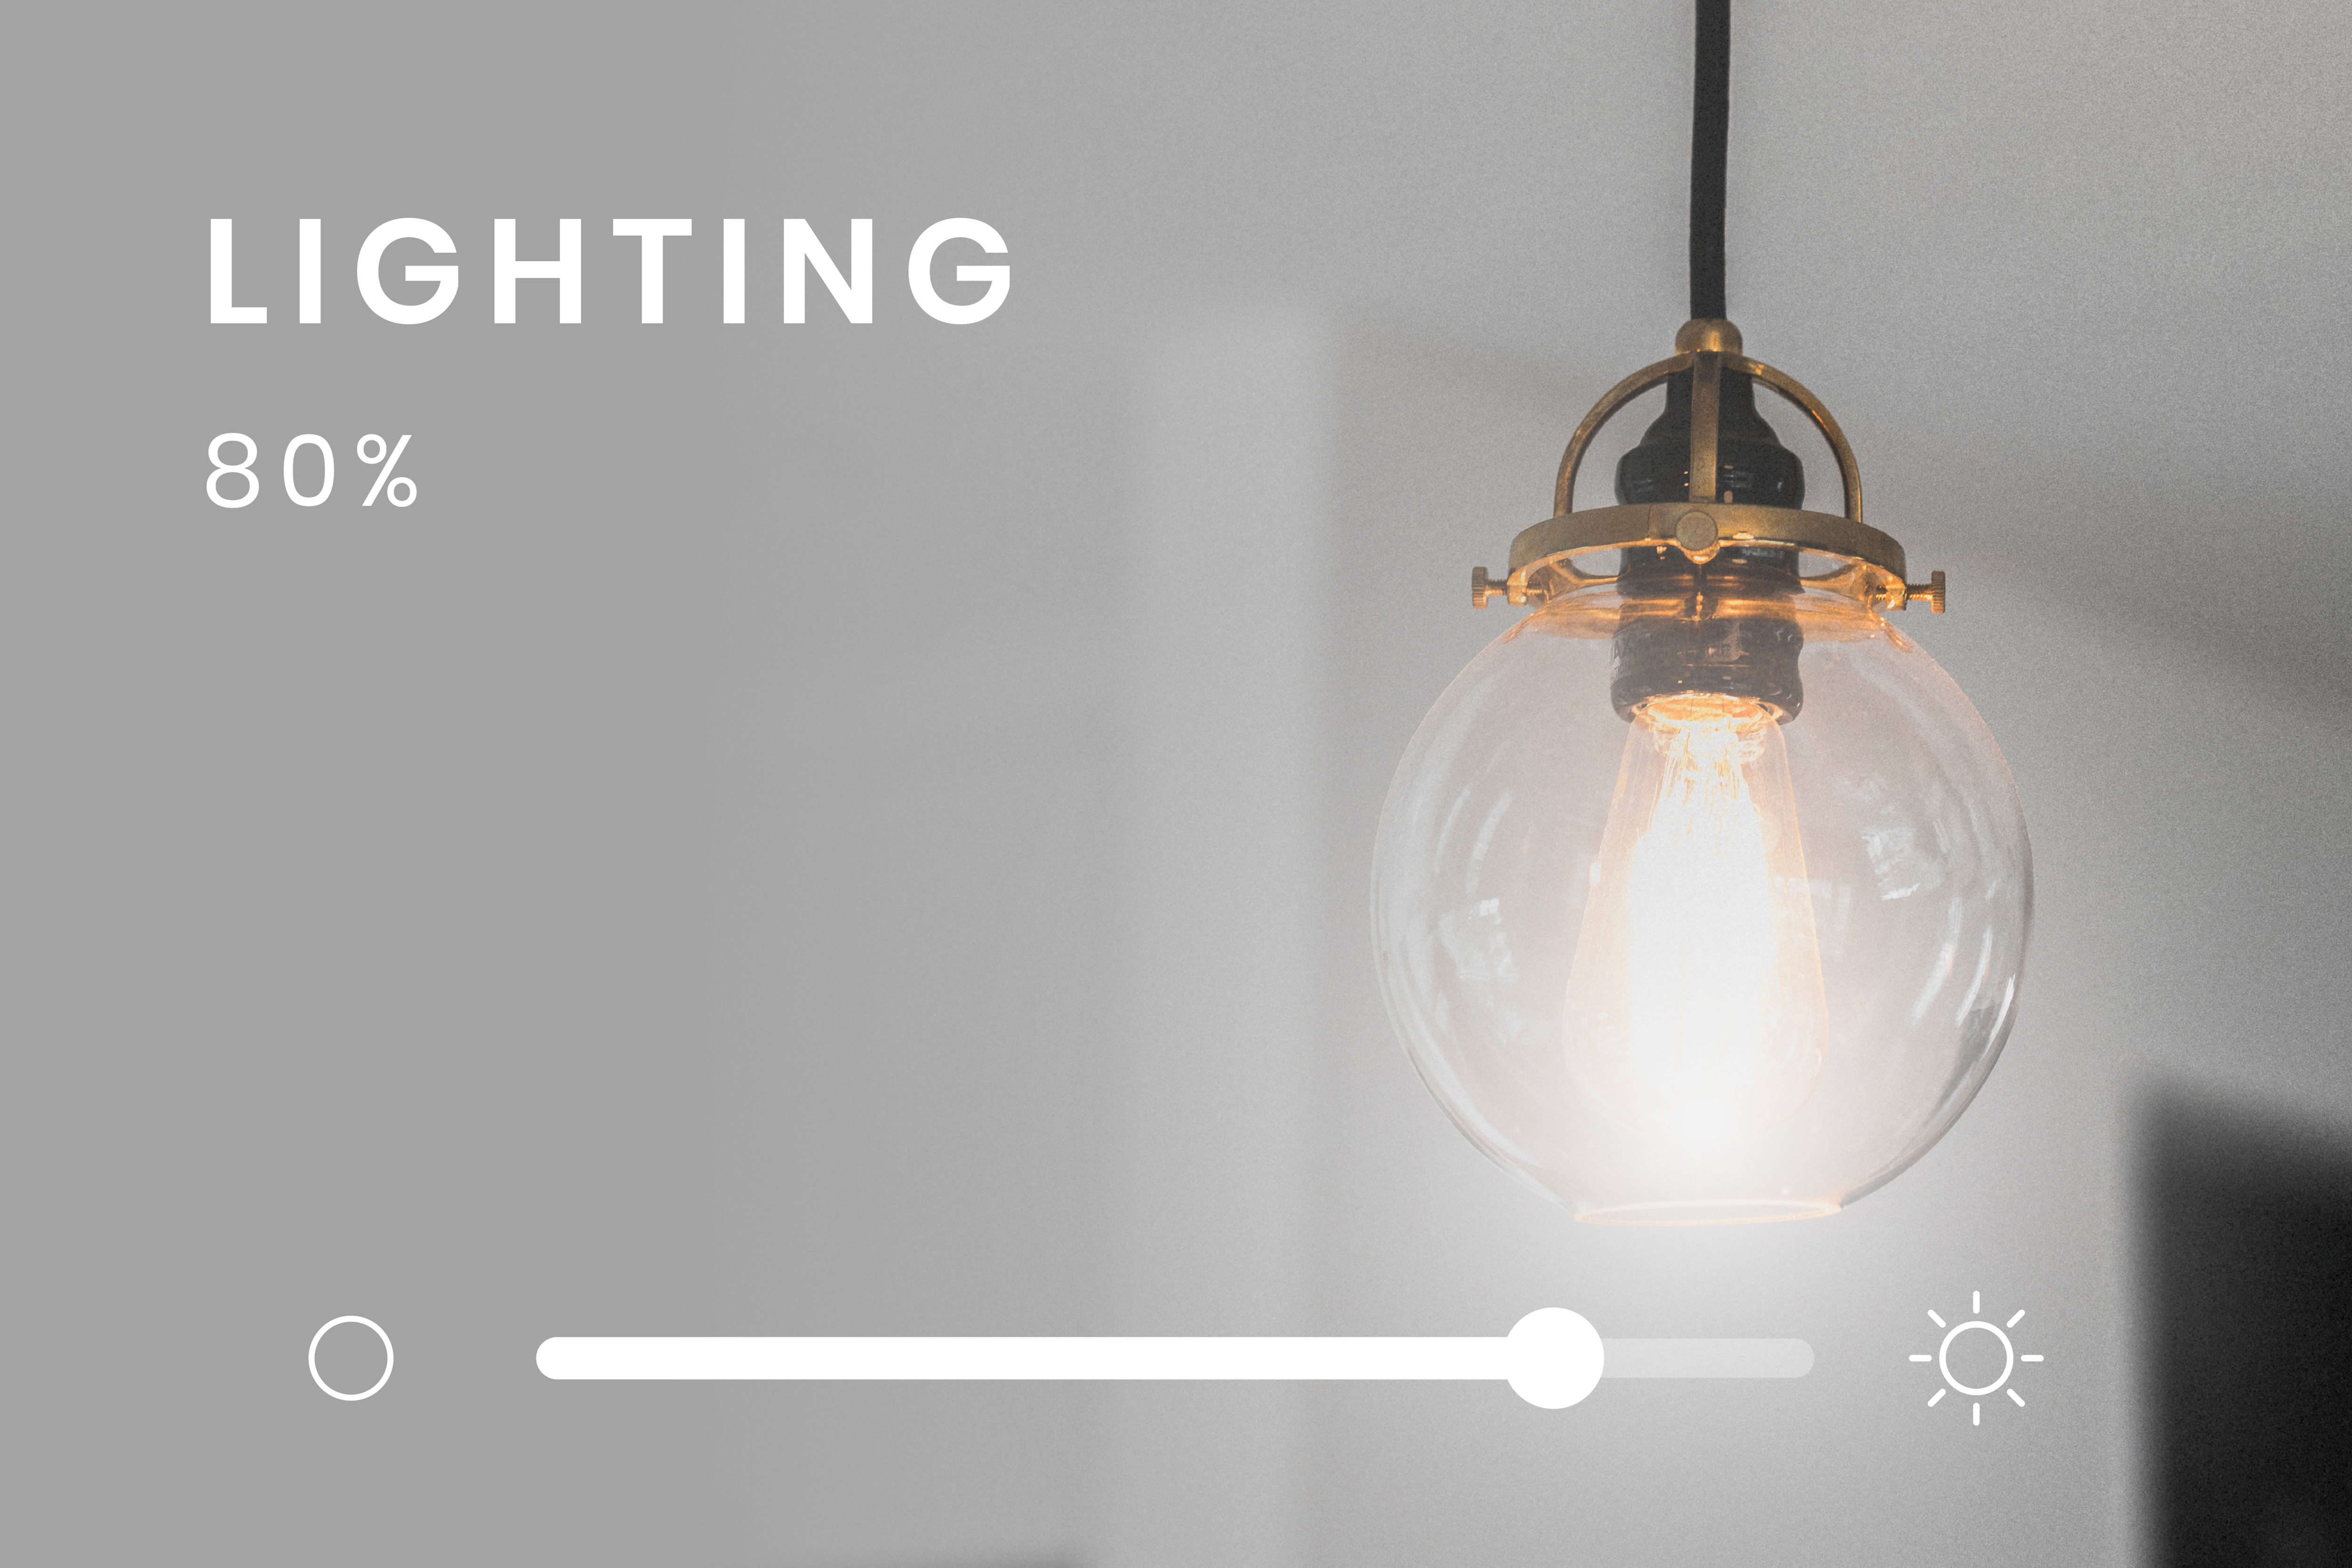 Smart home lighting system controller